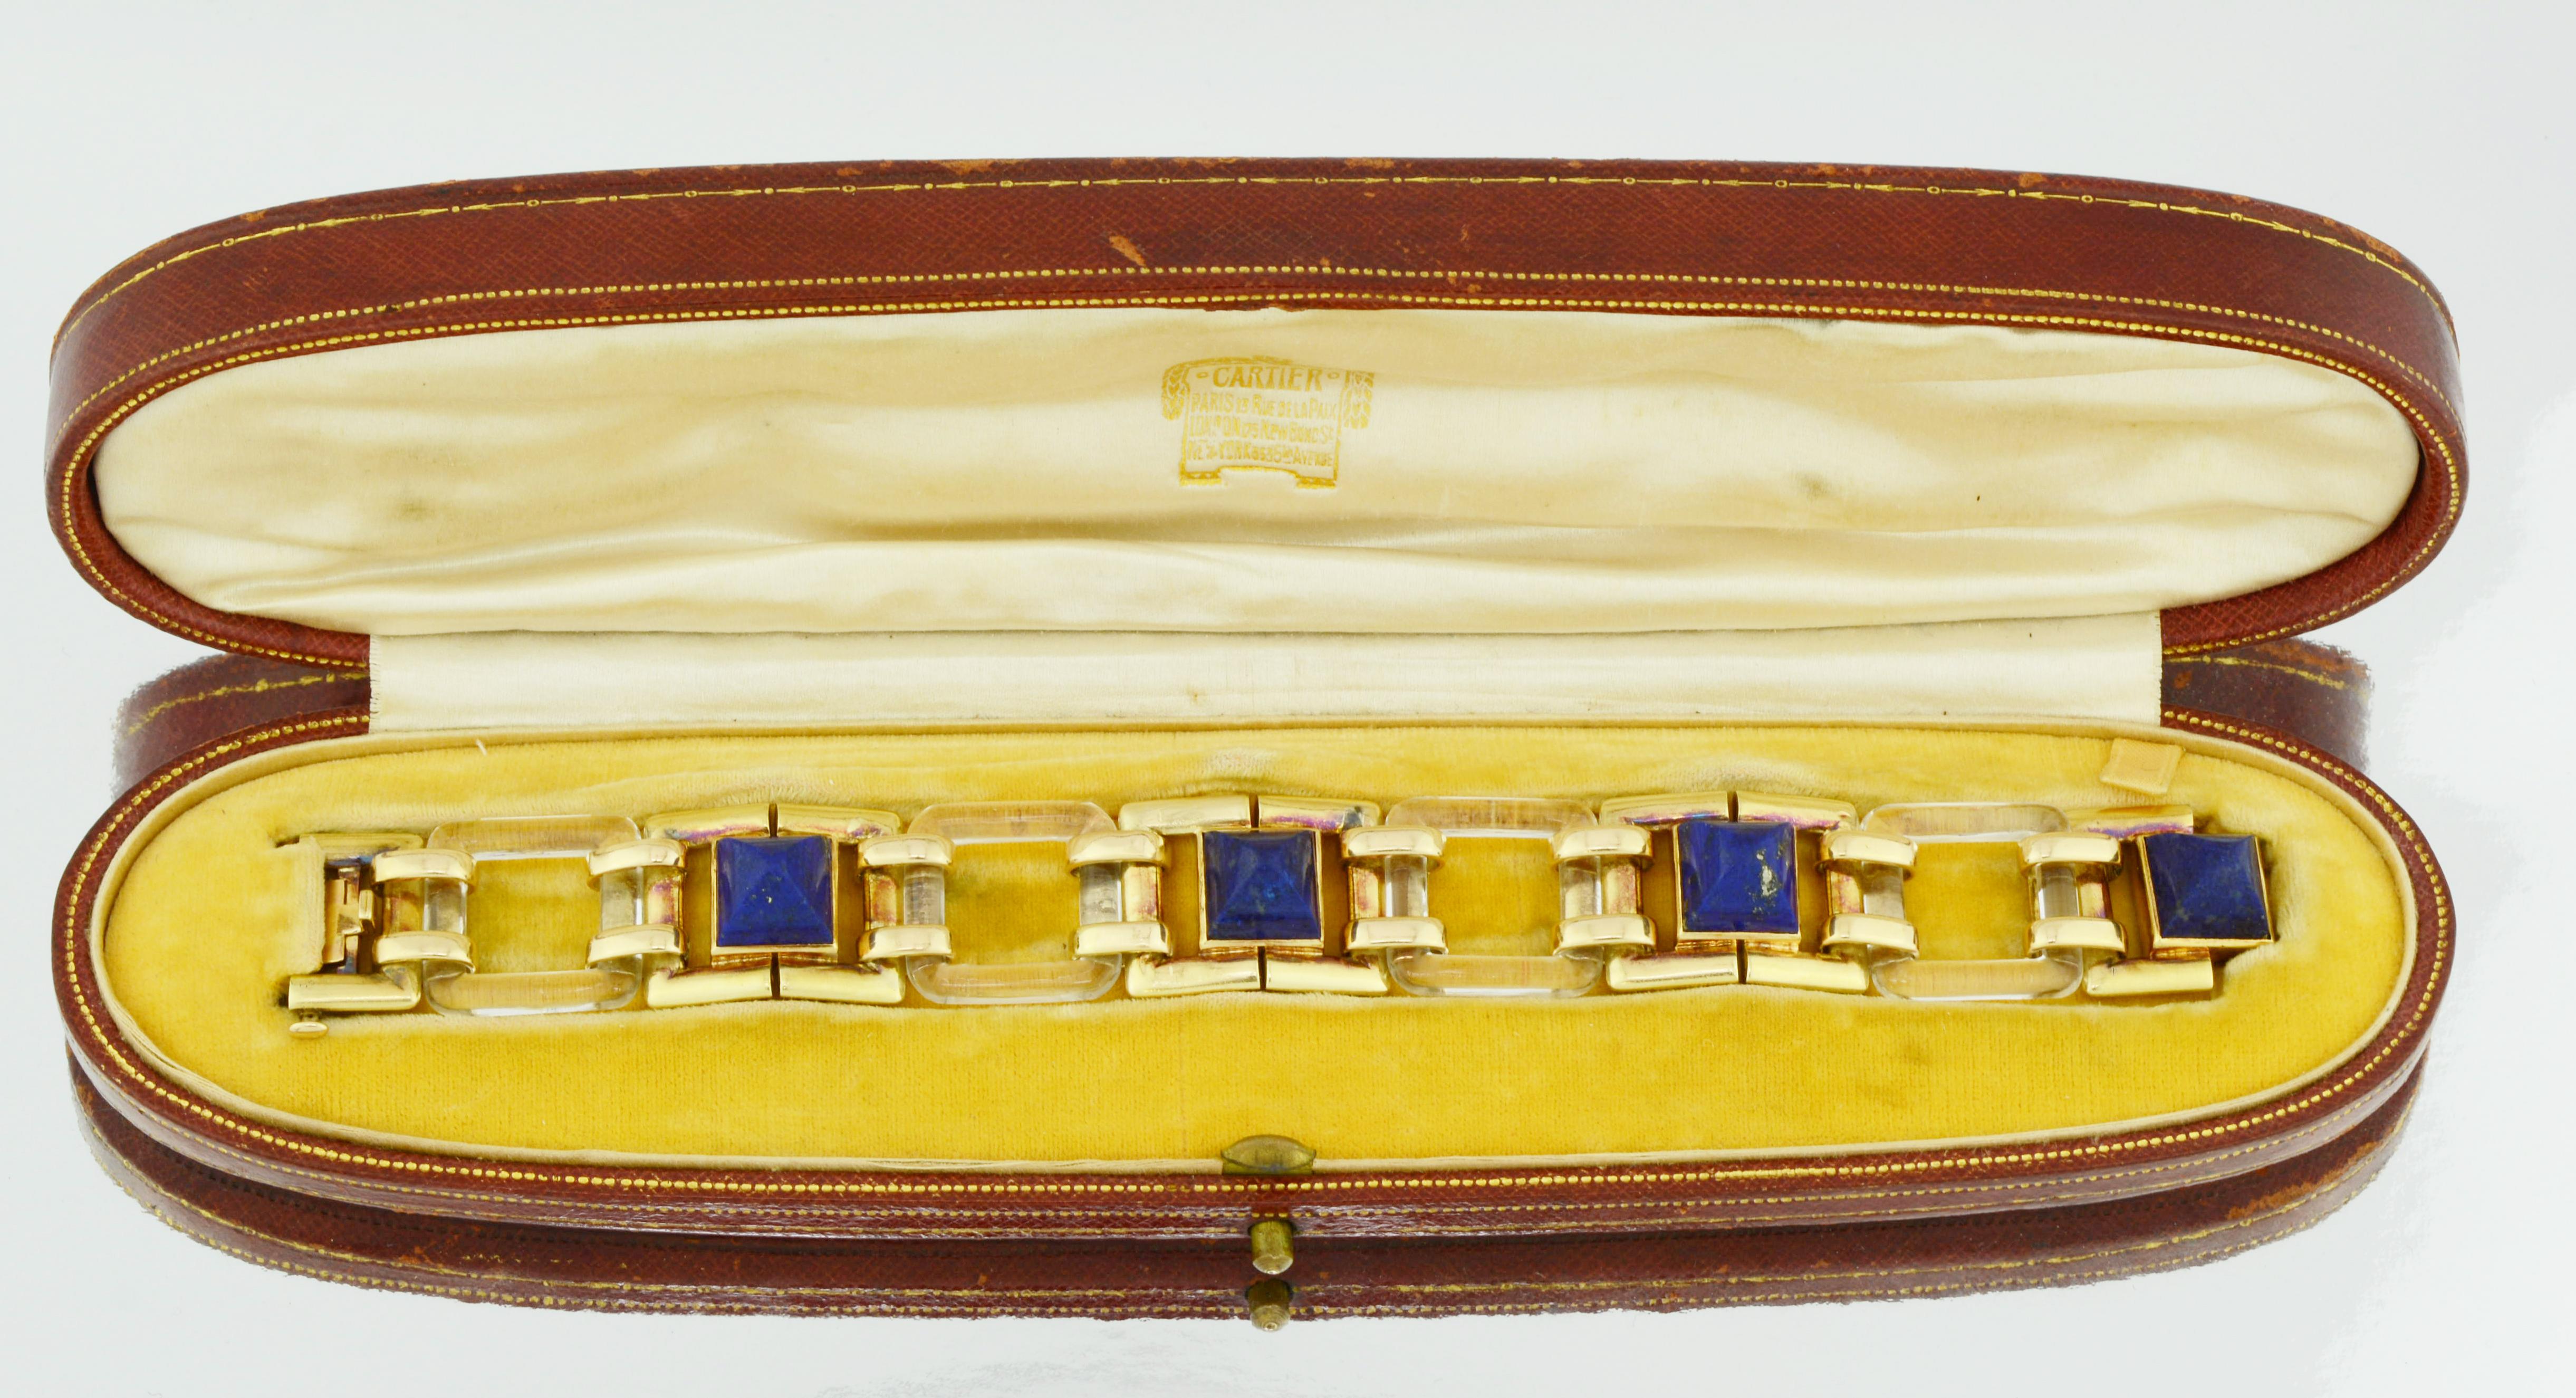 Cartier Goldarmband aus Lapislazuli und Bergkristall, um 1940 (Kegel-Cabochon) im Angebot